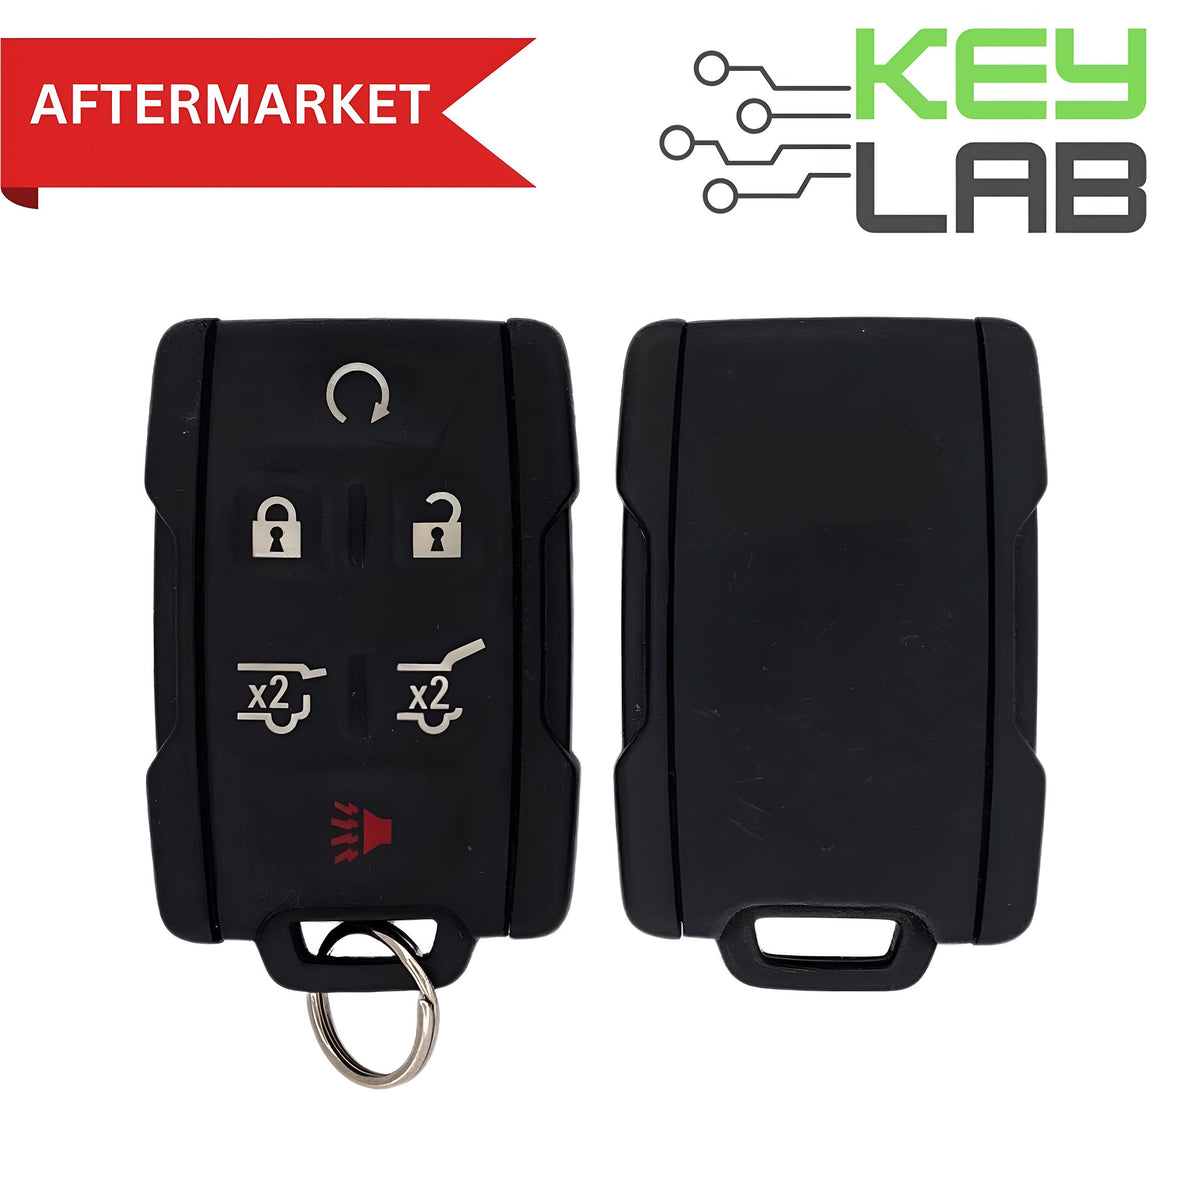 Chevrolet Aftermarket 2015-2020 Suburban, Tahoe Keyless Entry Remote 6B Hatch/Hatch Glass/Remote Start FCCID: M3N32337100 PN# 13577766 - Royal Key Supply